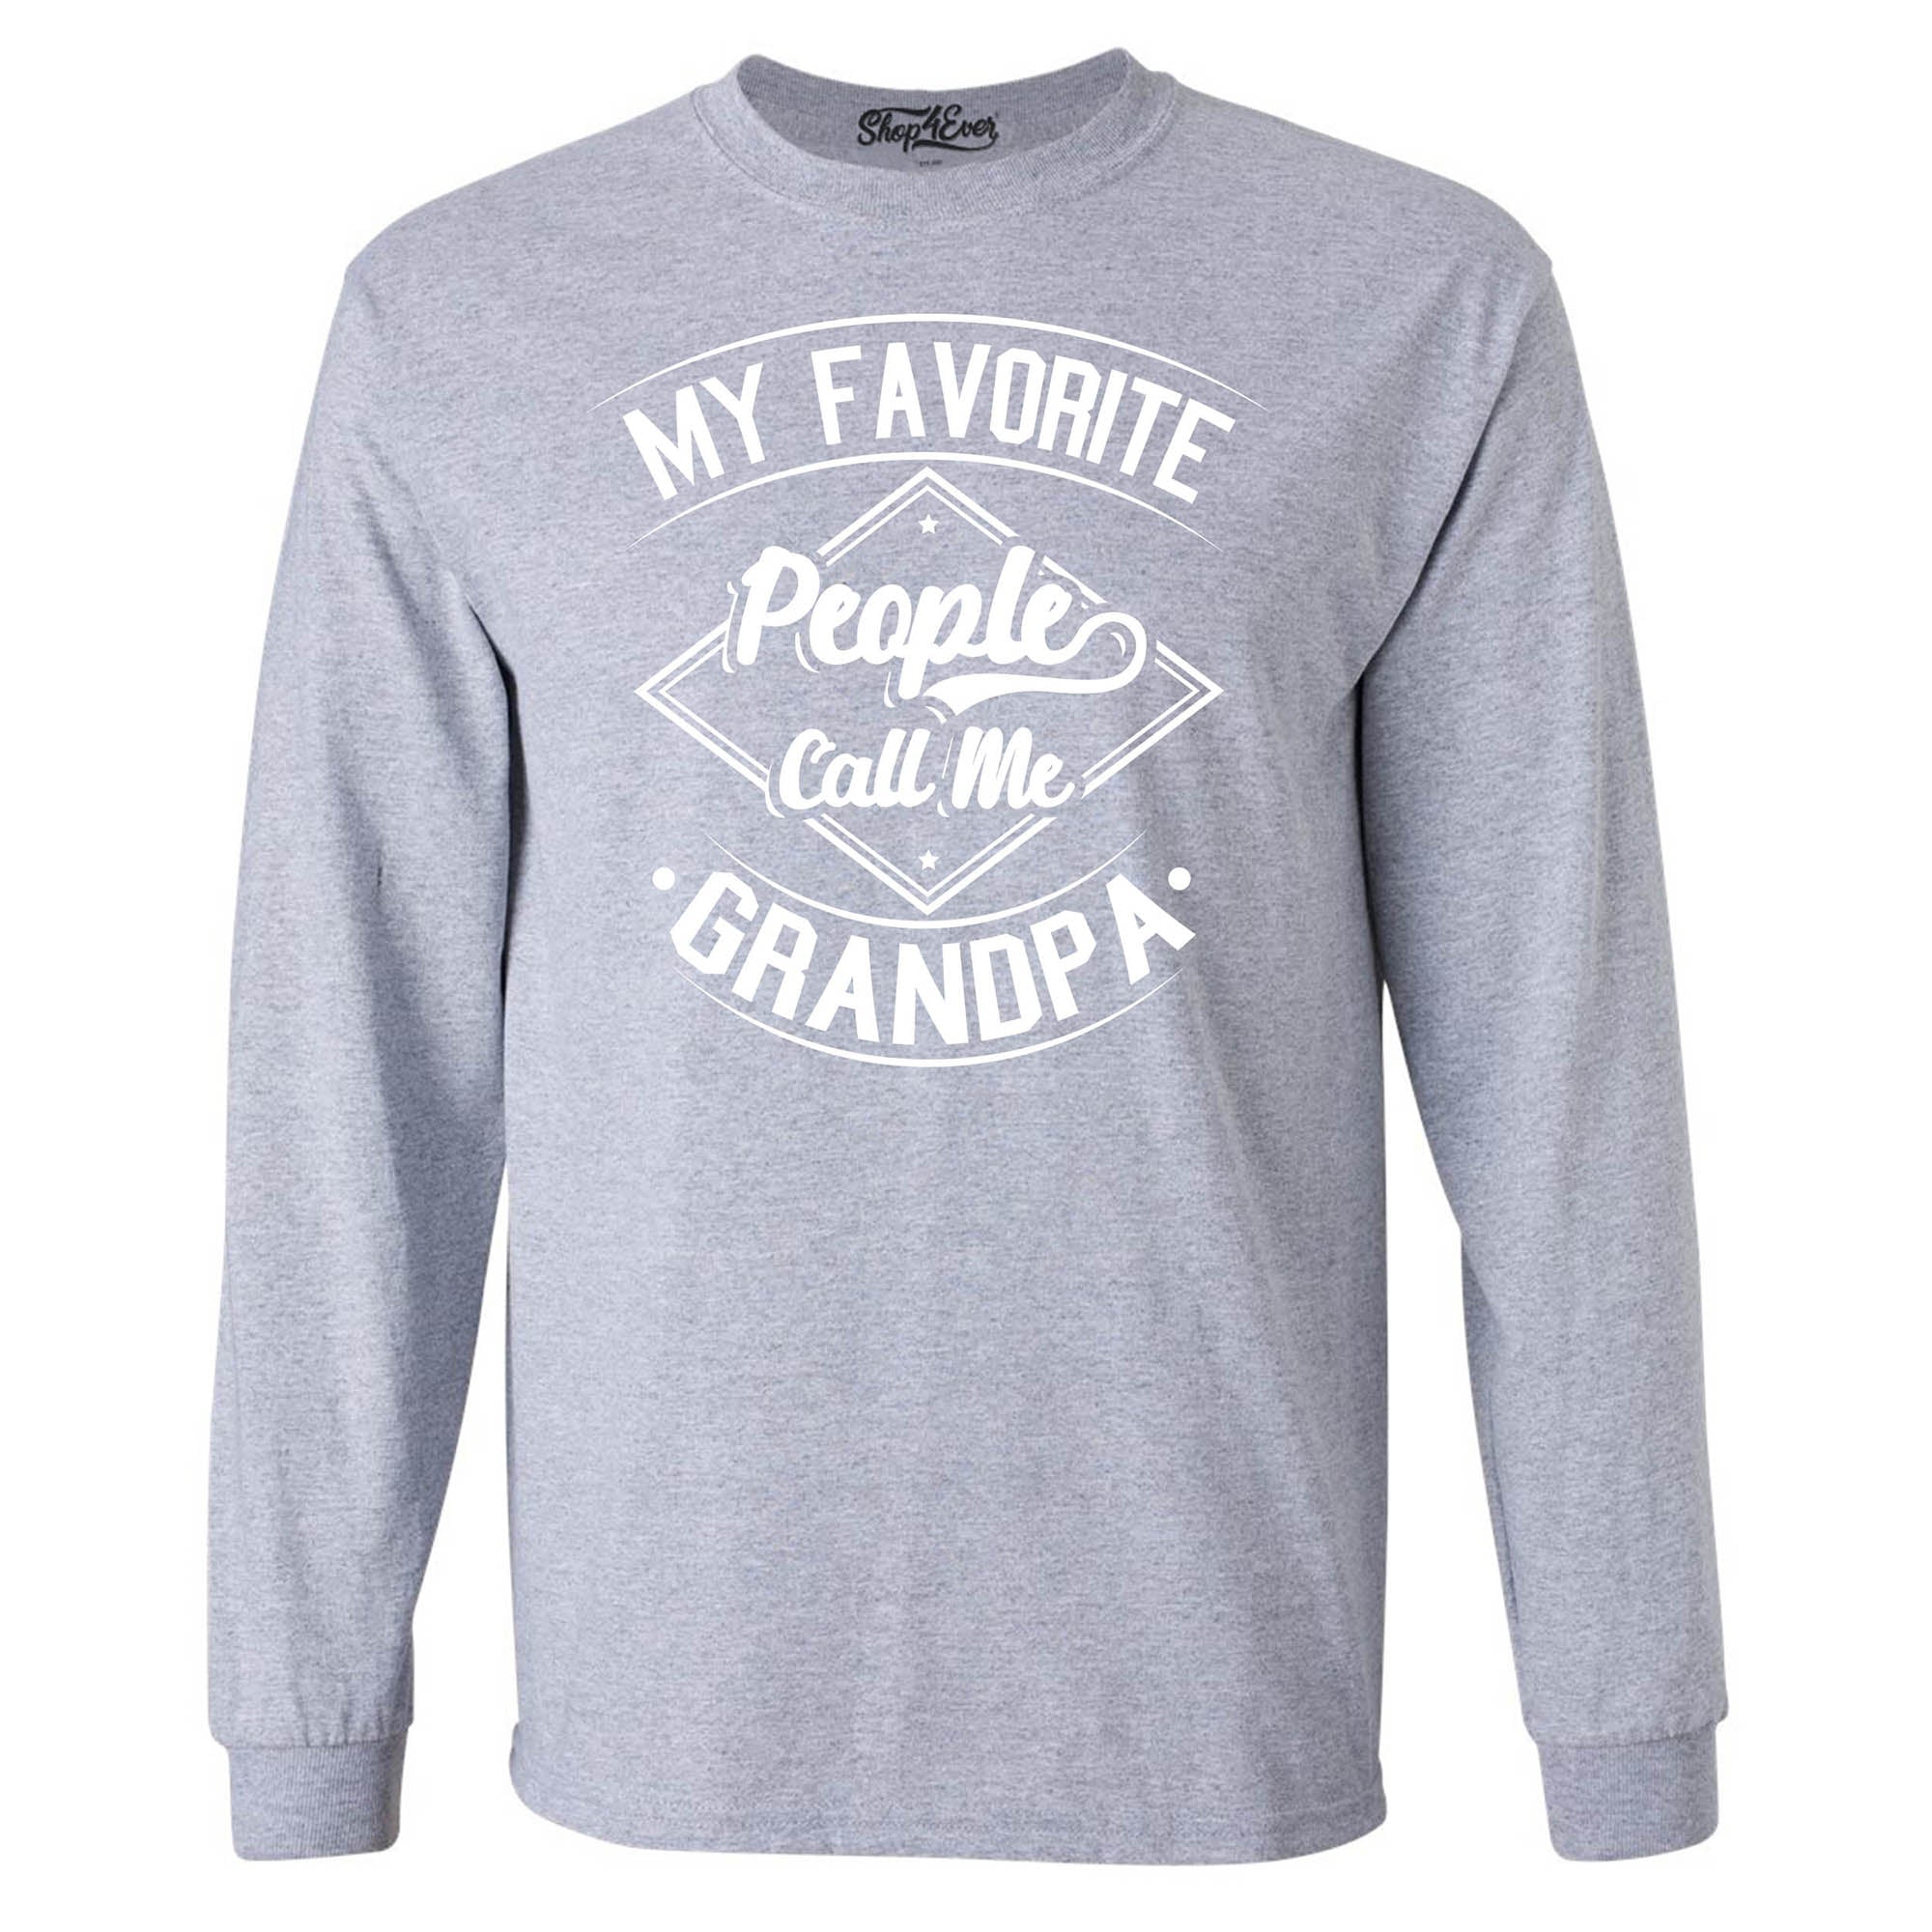 My Favorite People Call Me Grandpa Long Sleeve Shirt